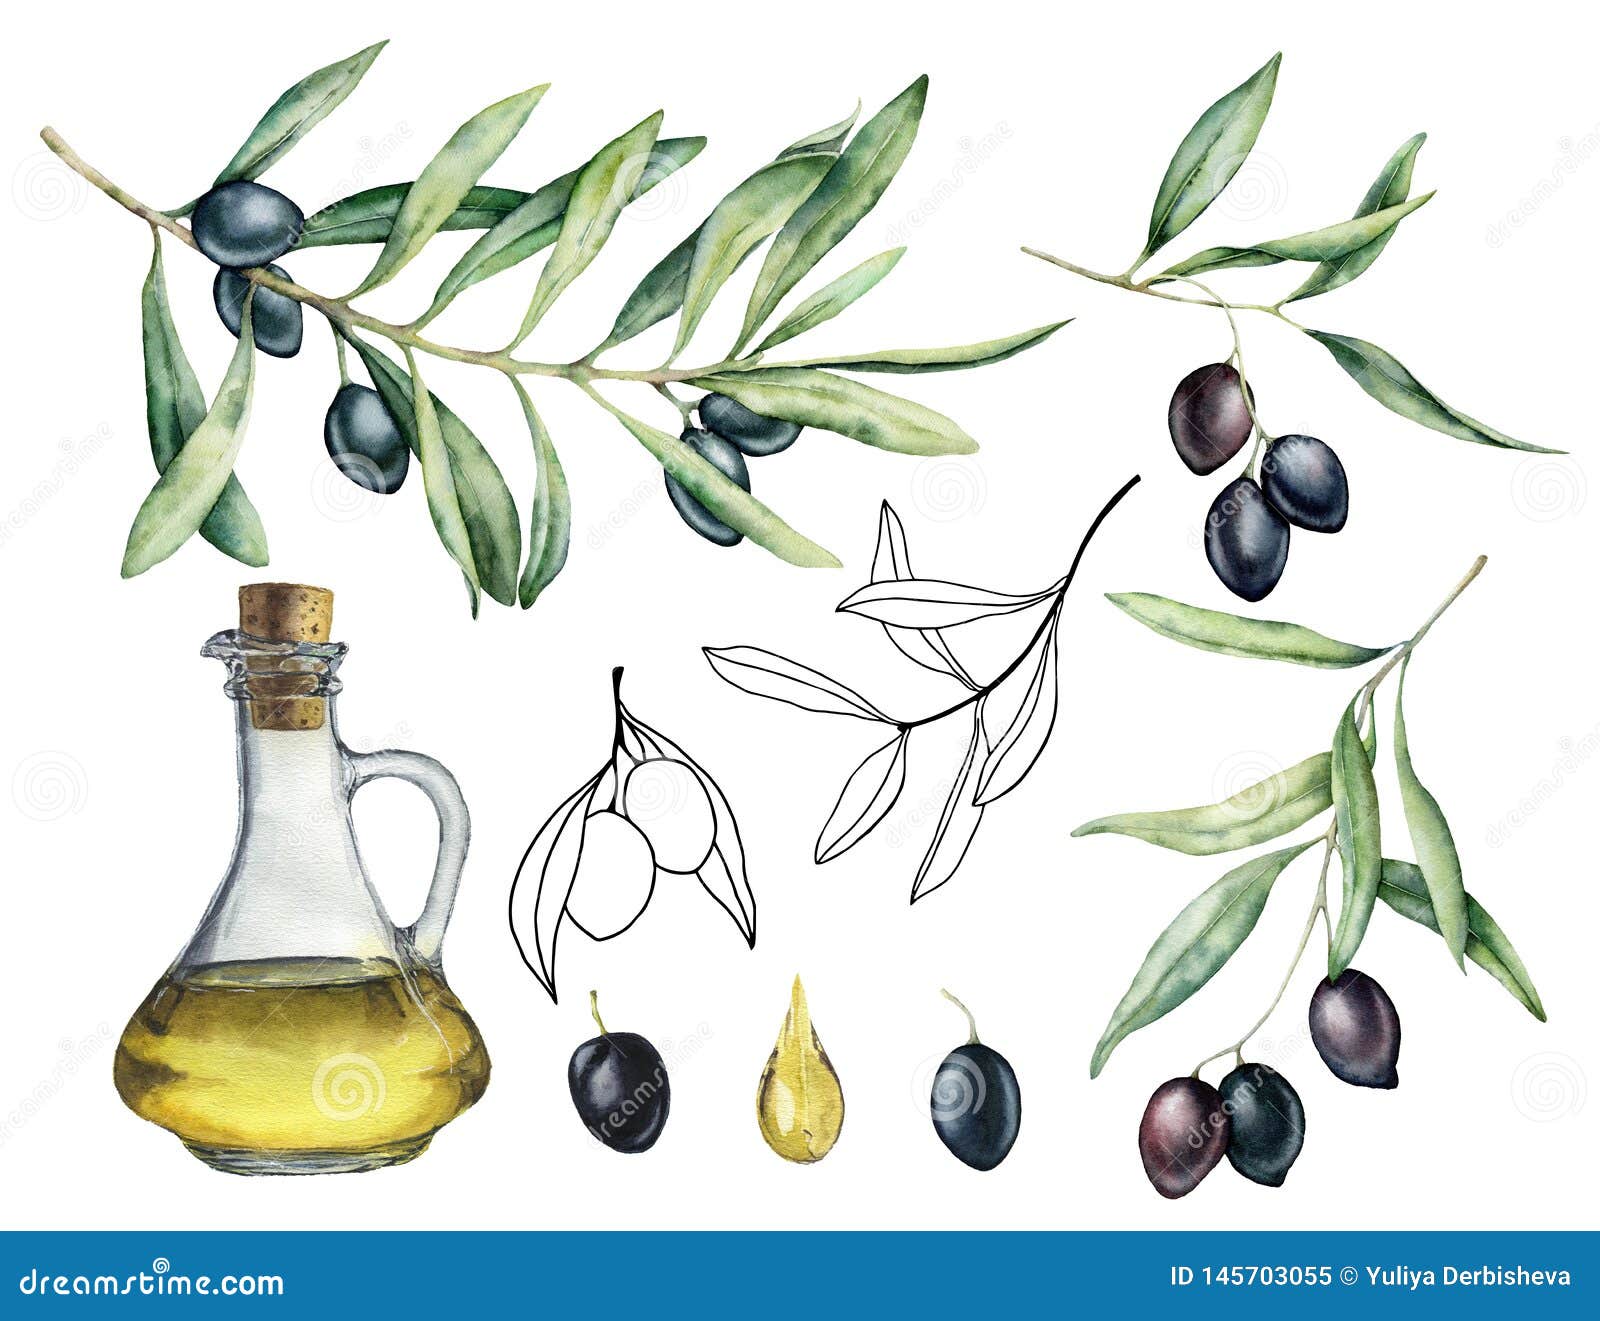 Скетч акварелью оливки